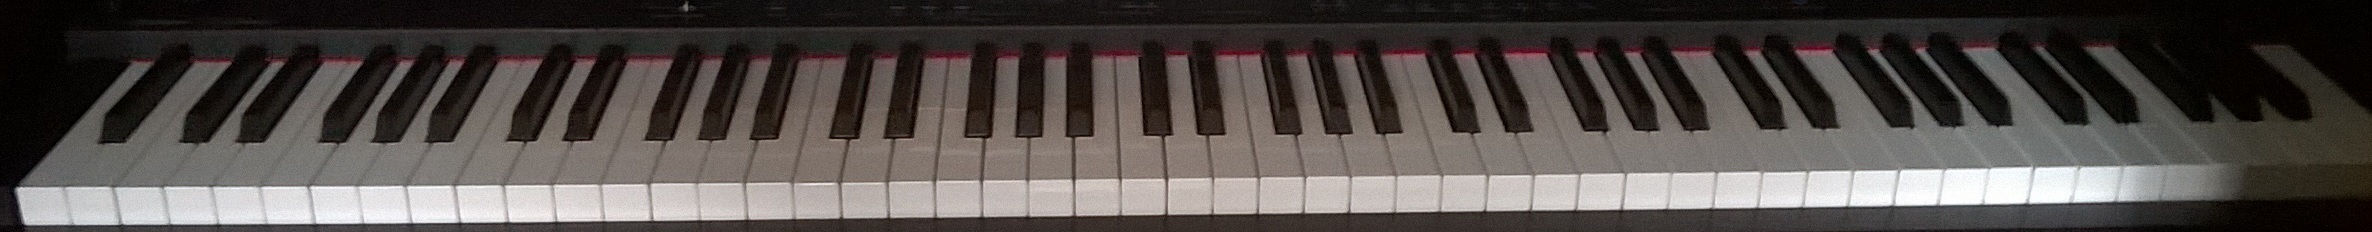 Bild: Tastatur eines e-Piano